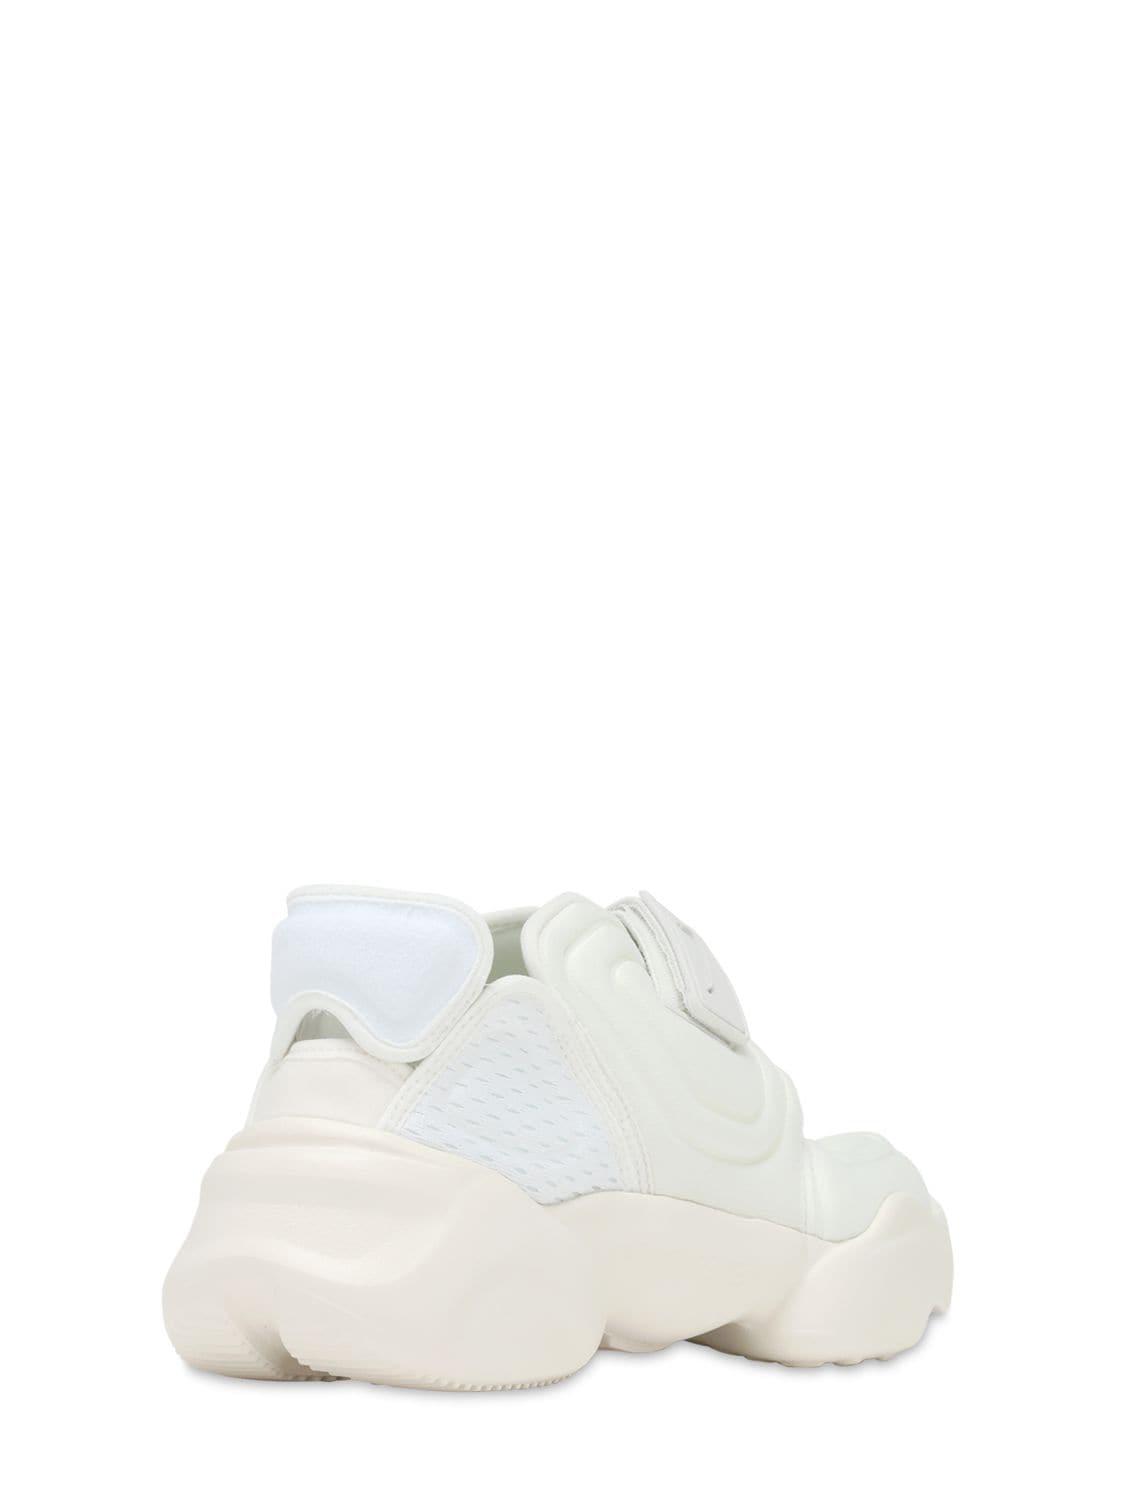 Nike Aqua Rift Neoprene And Mesh Sneakers in White/White (White 